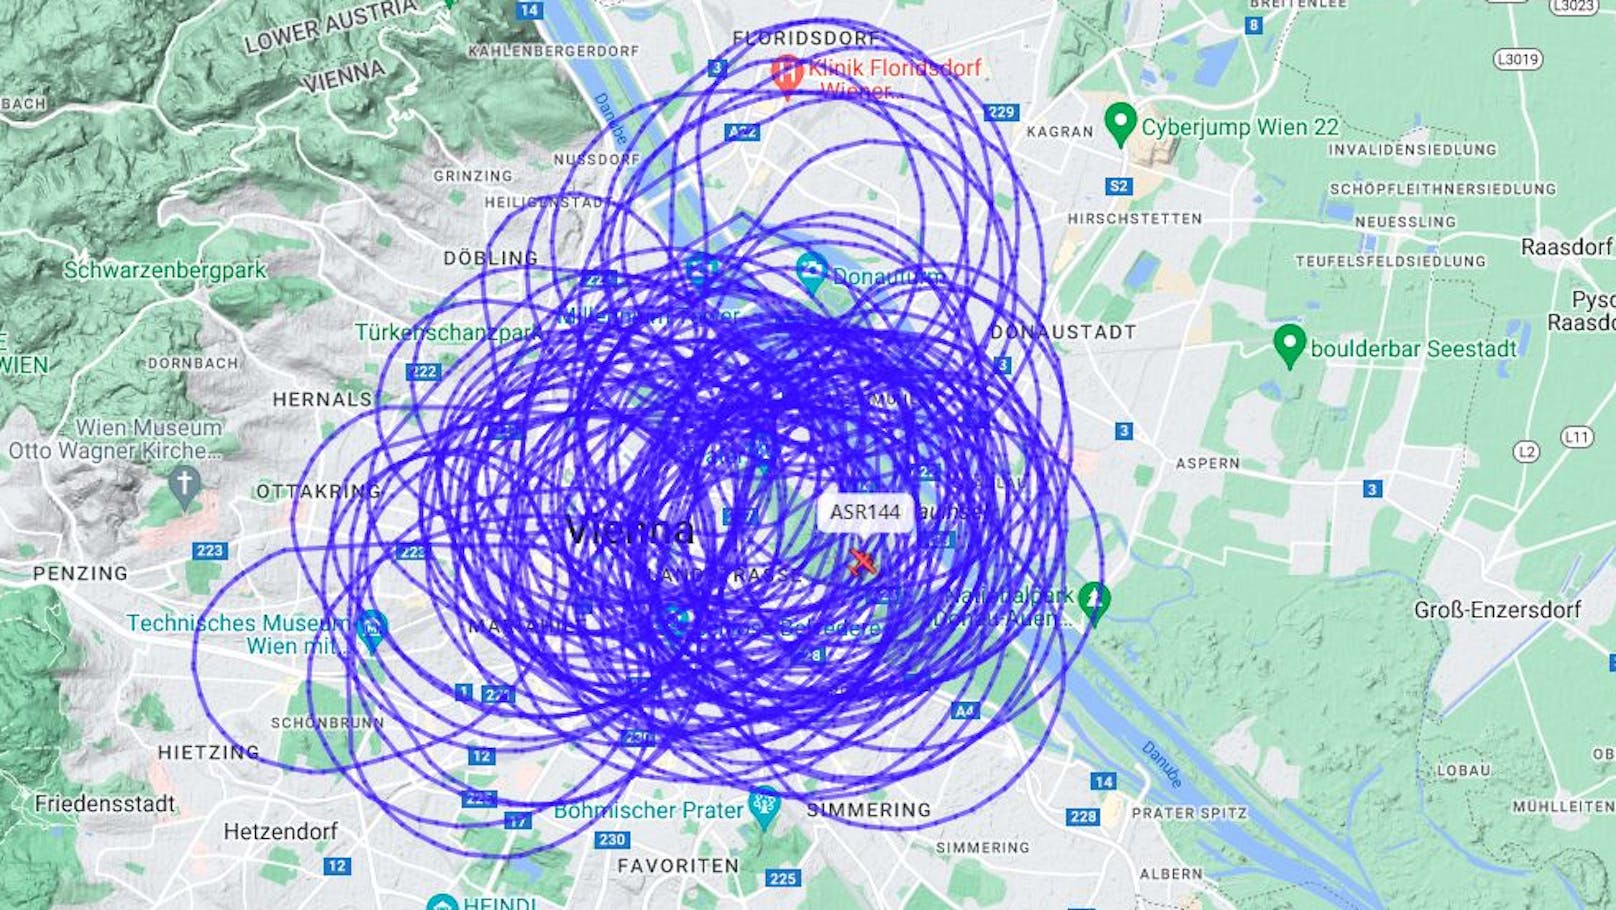 "Beängstigend" – Flieger kreiste stundenlang über Wien